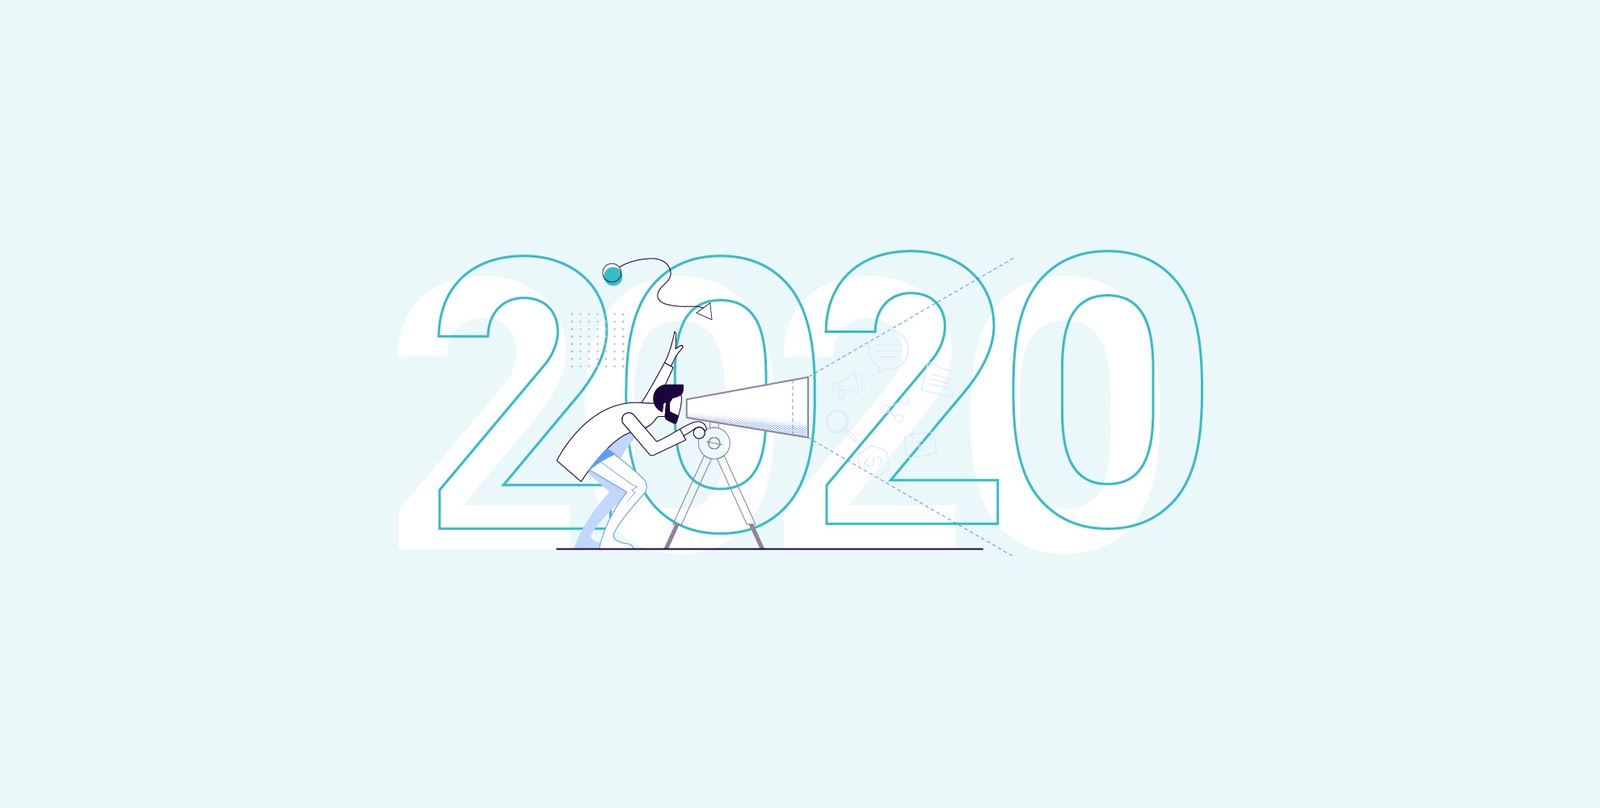 Rainbird’s CTO 2020 predictions